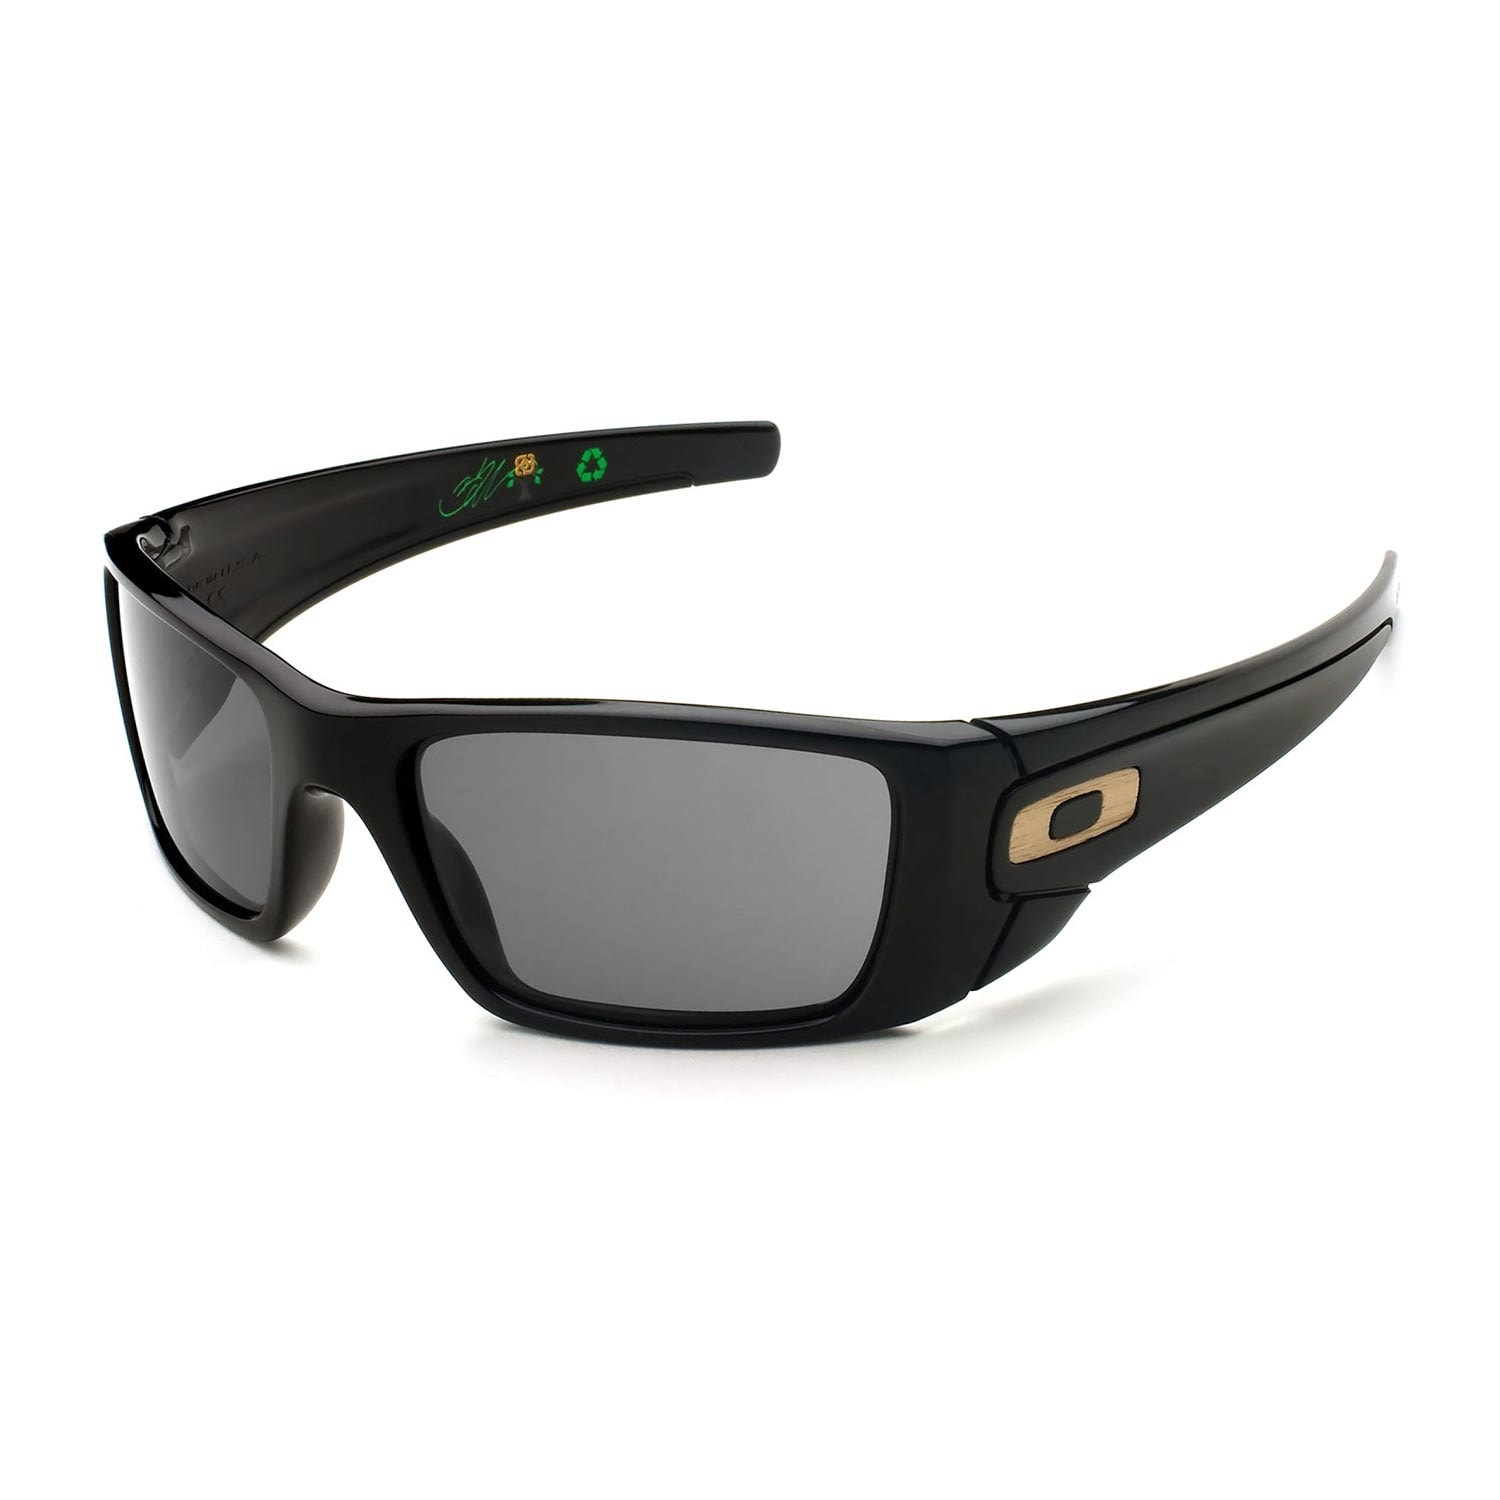 Sunglasses Oakley Fuel Cell Bob Burnquist polished black | Snowboard Zezula